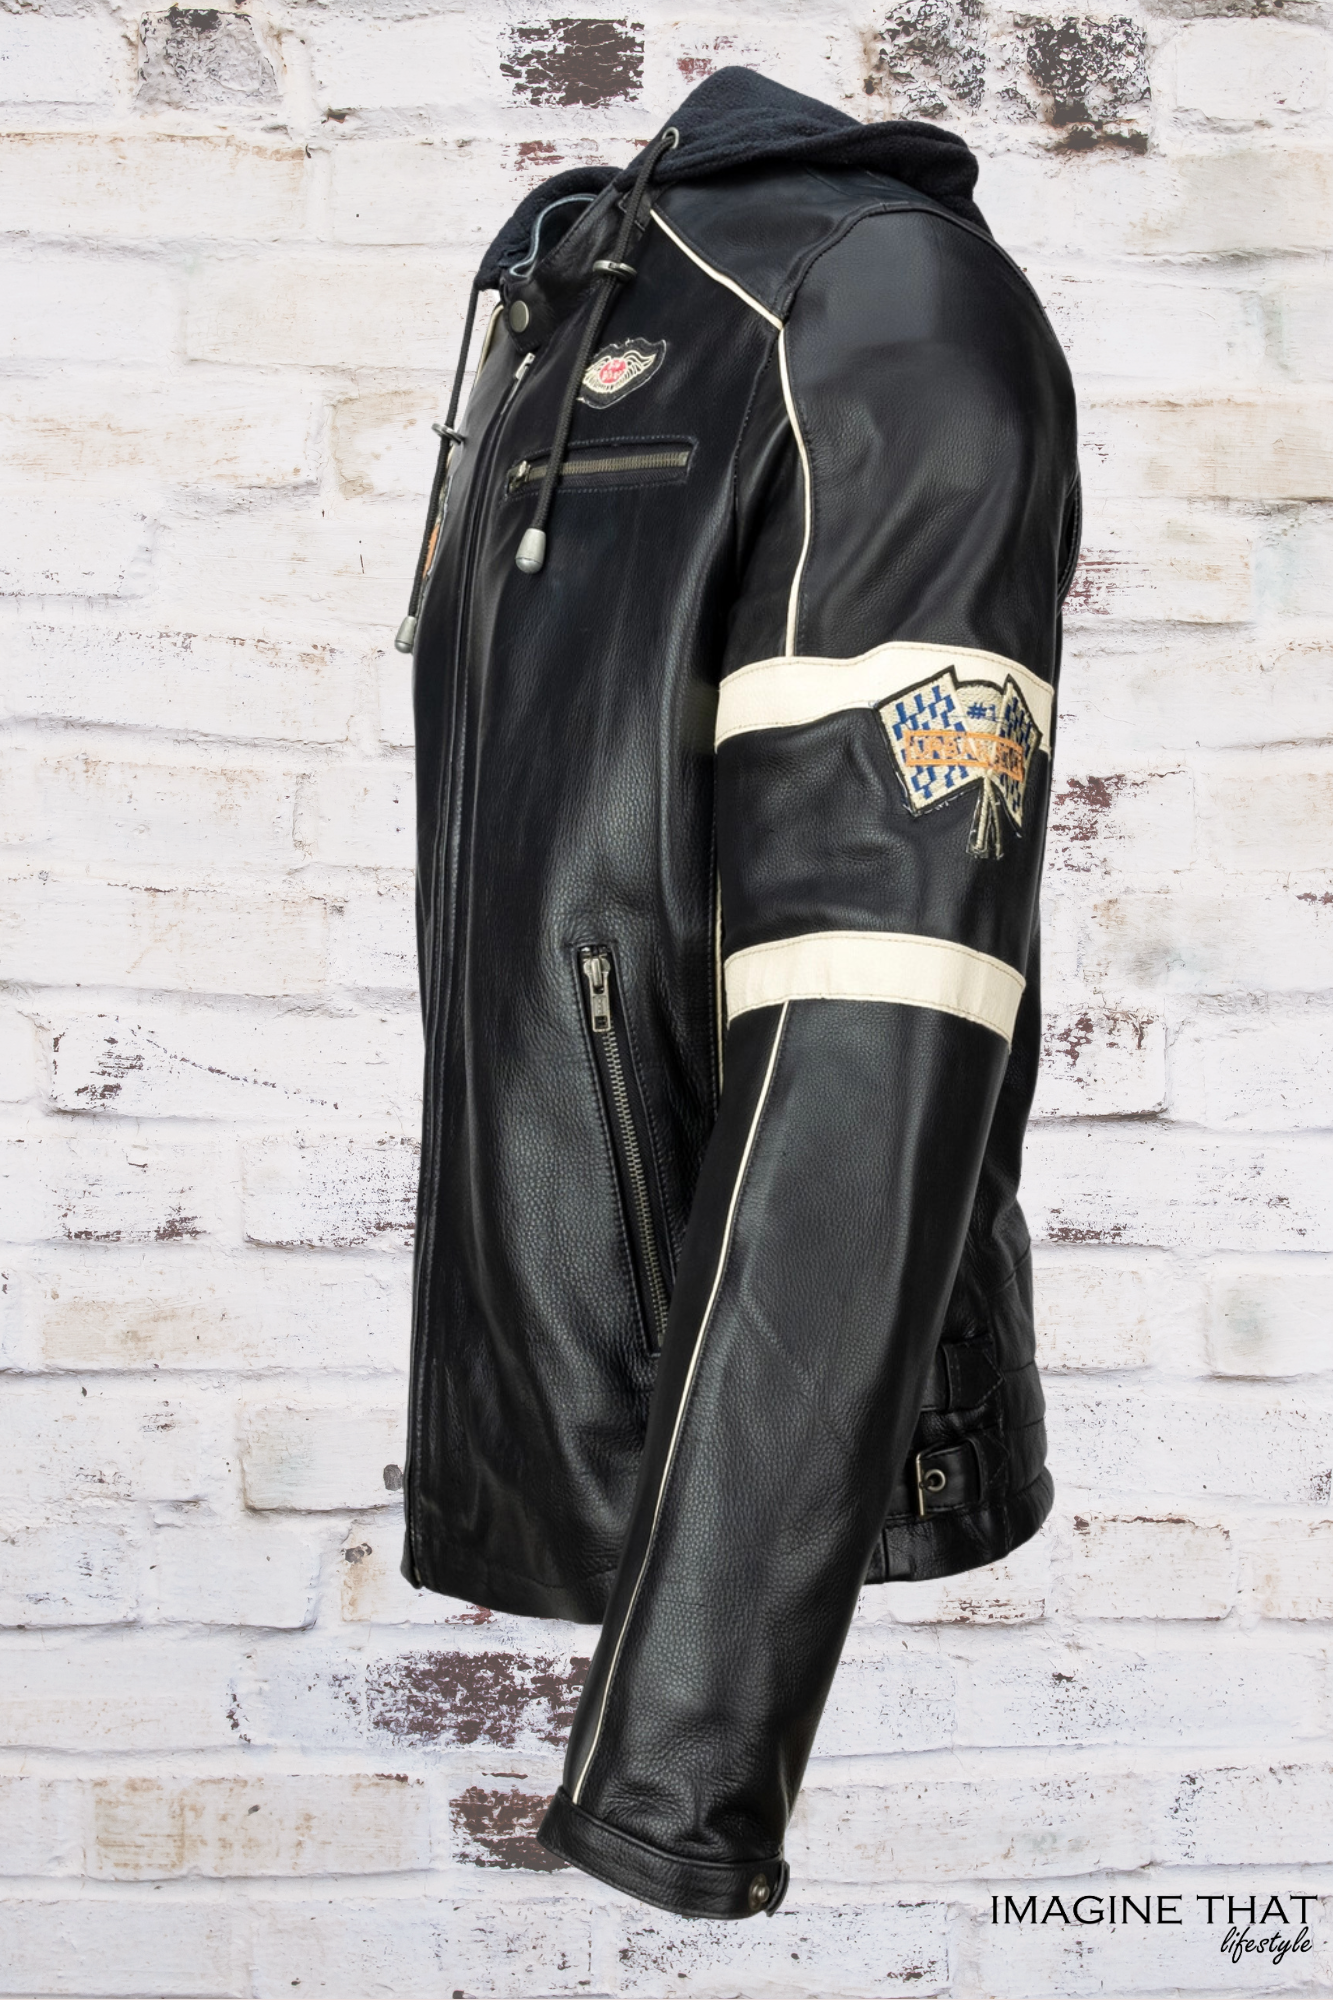 'Austin' - Gents Motorcycle Leather Jacket